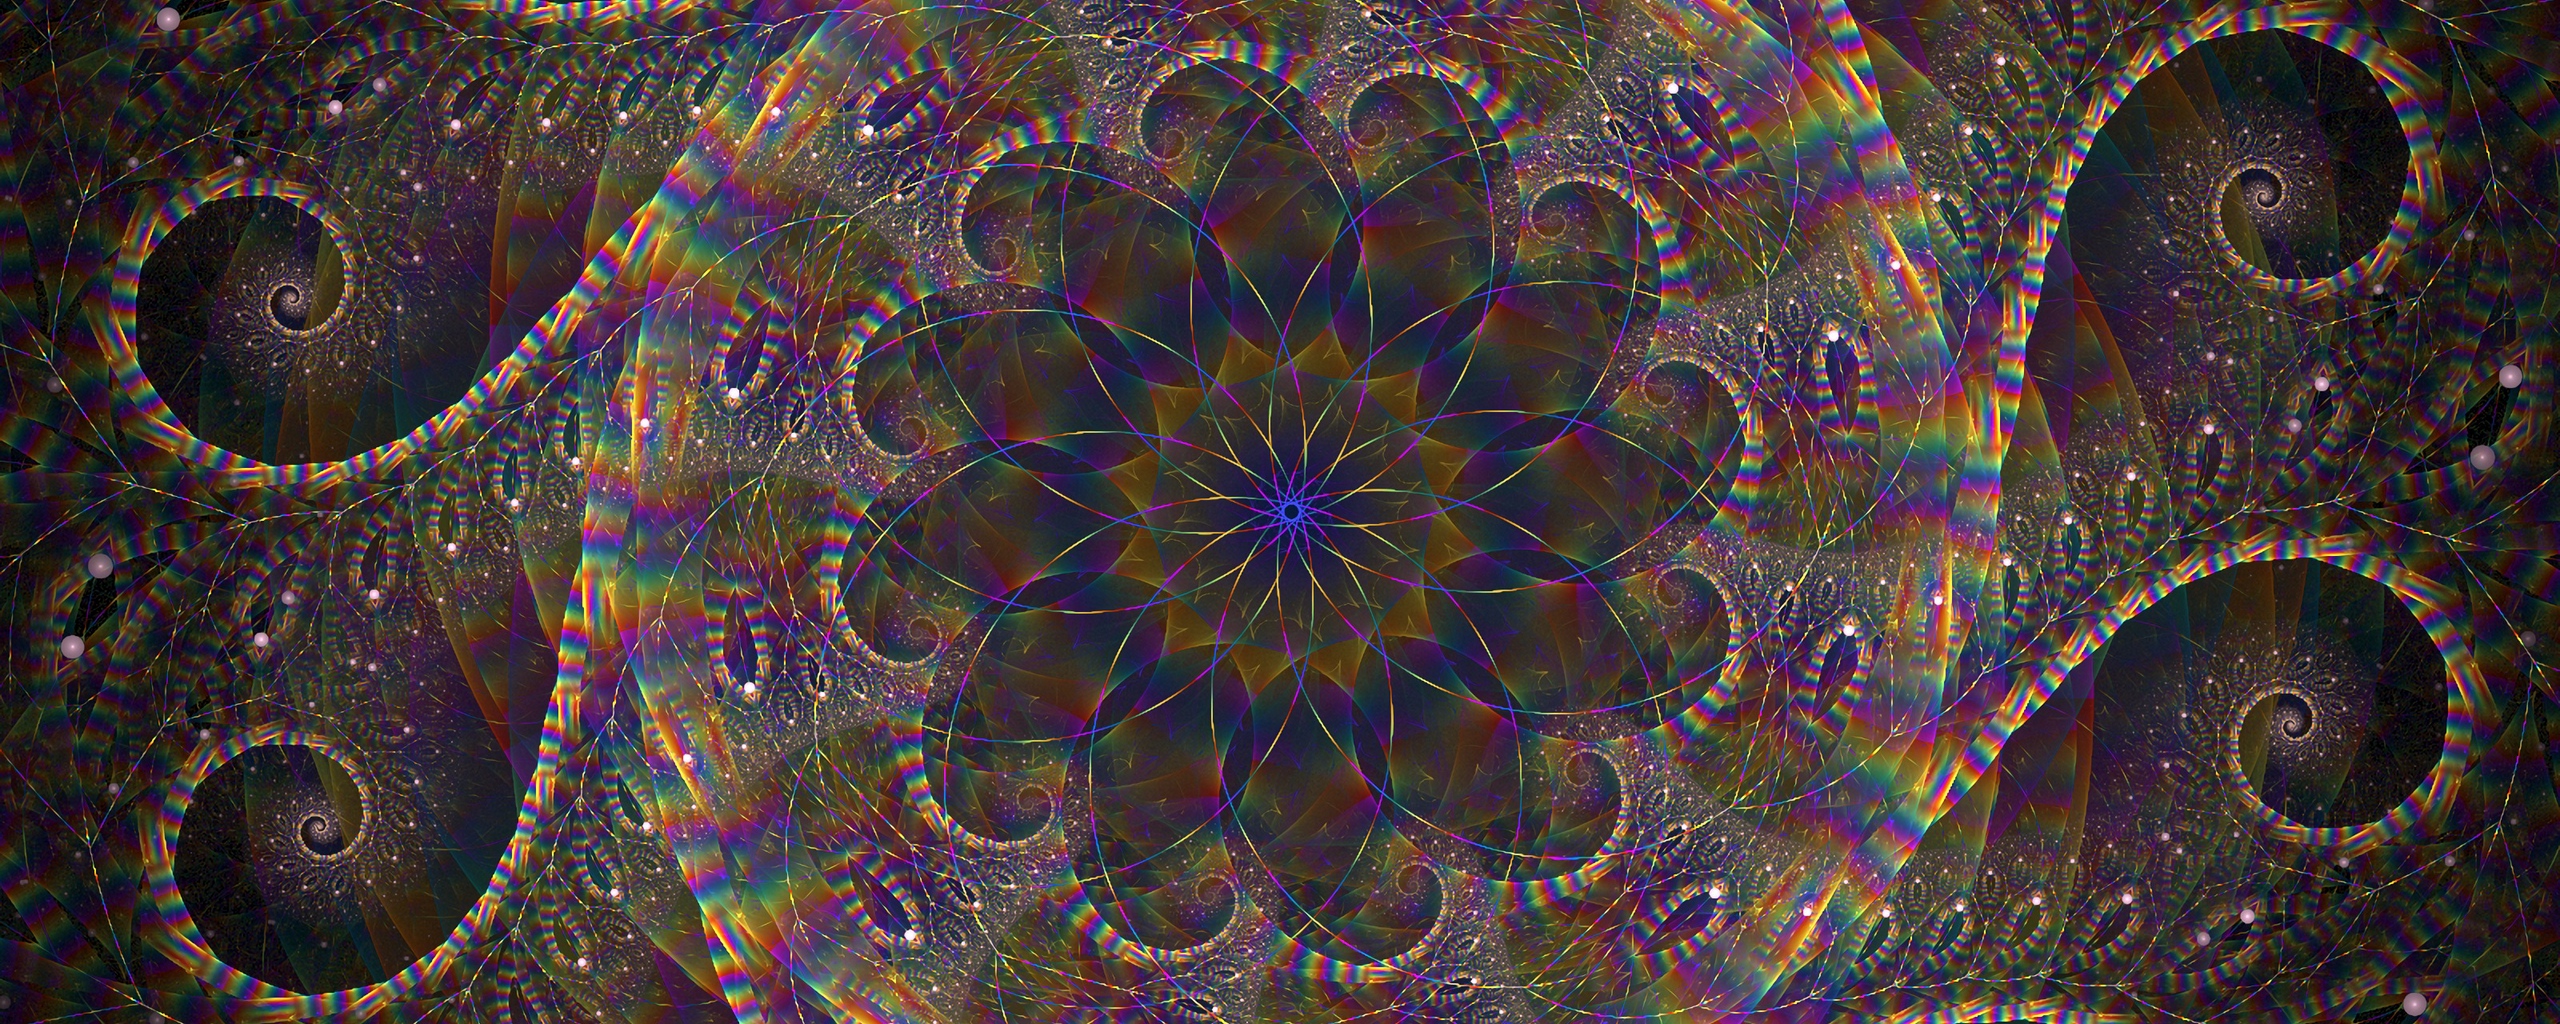 Download wallpaper 2560x1024 fractal, kaleidoscope